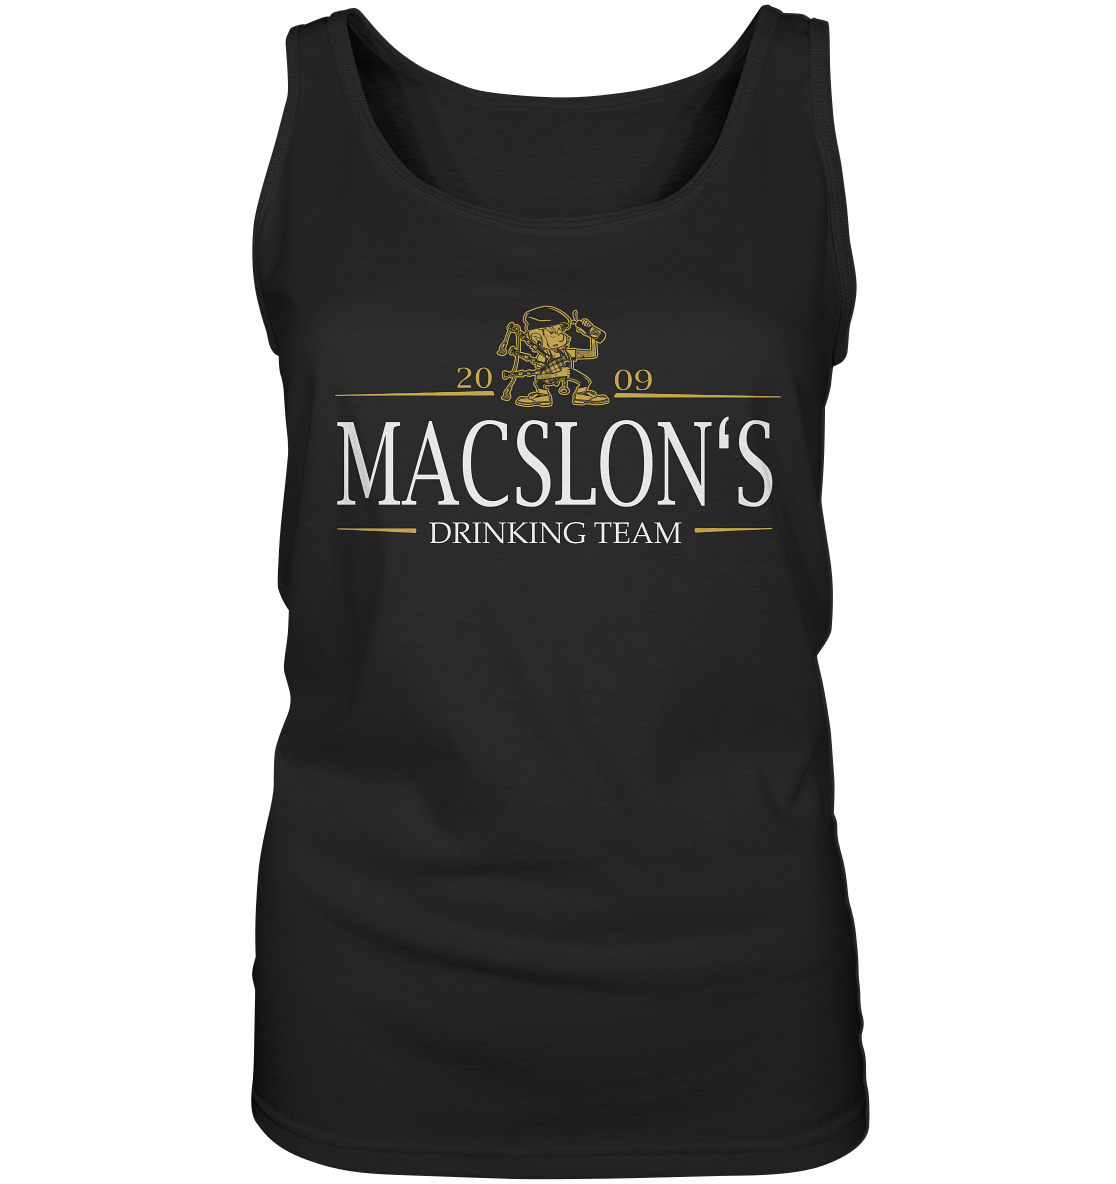 MacSlon's "Drinking Team" - Ladies Tank-Top